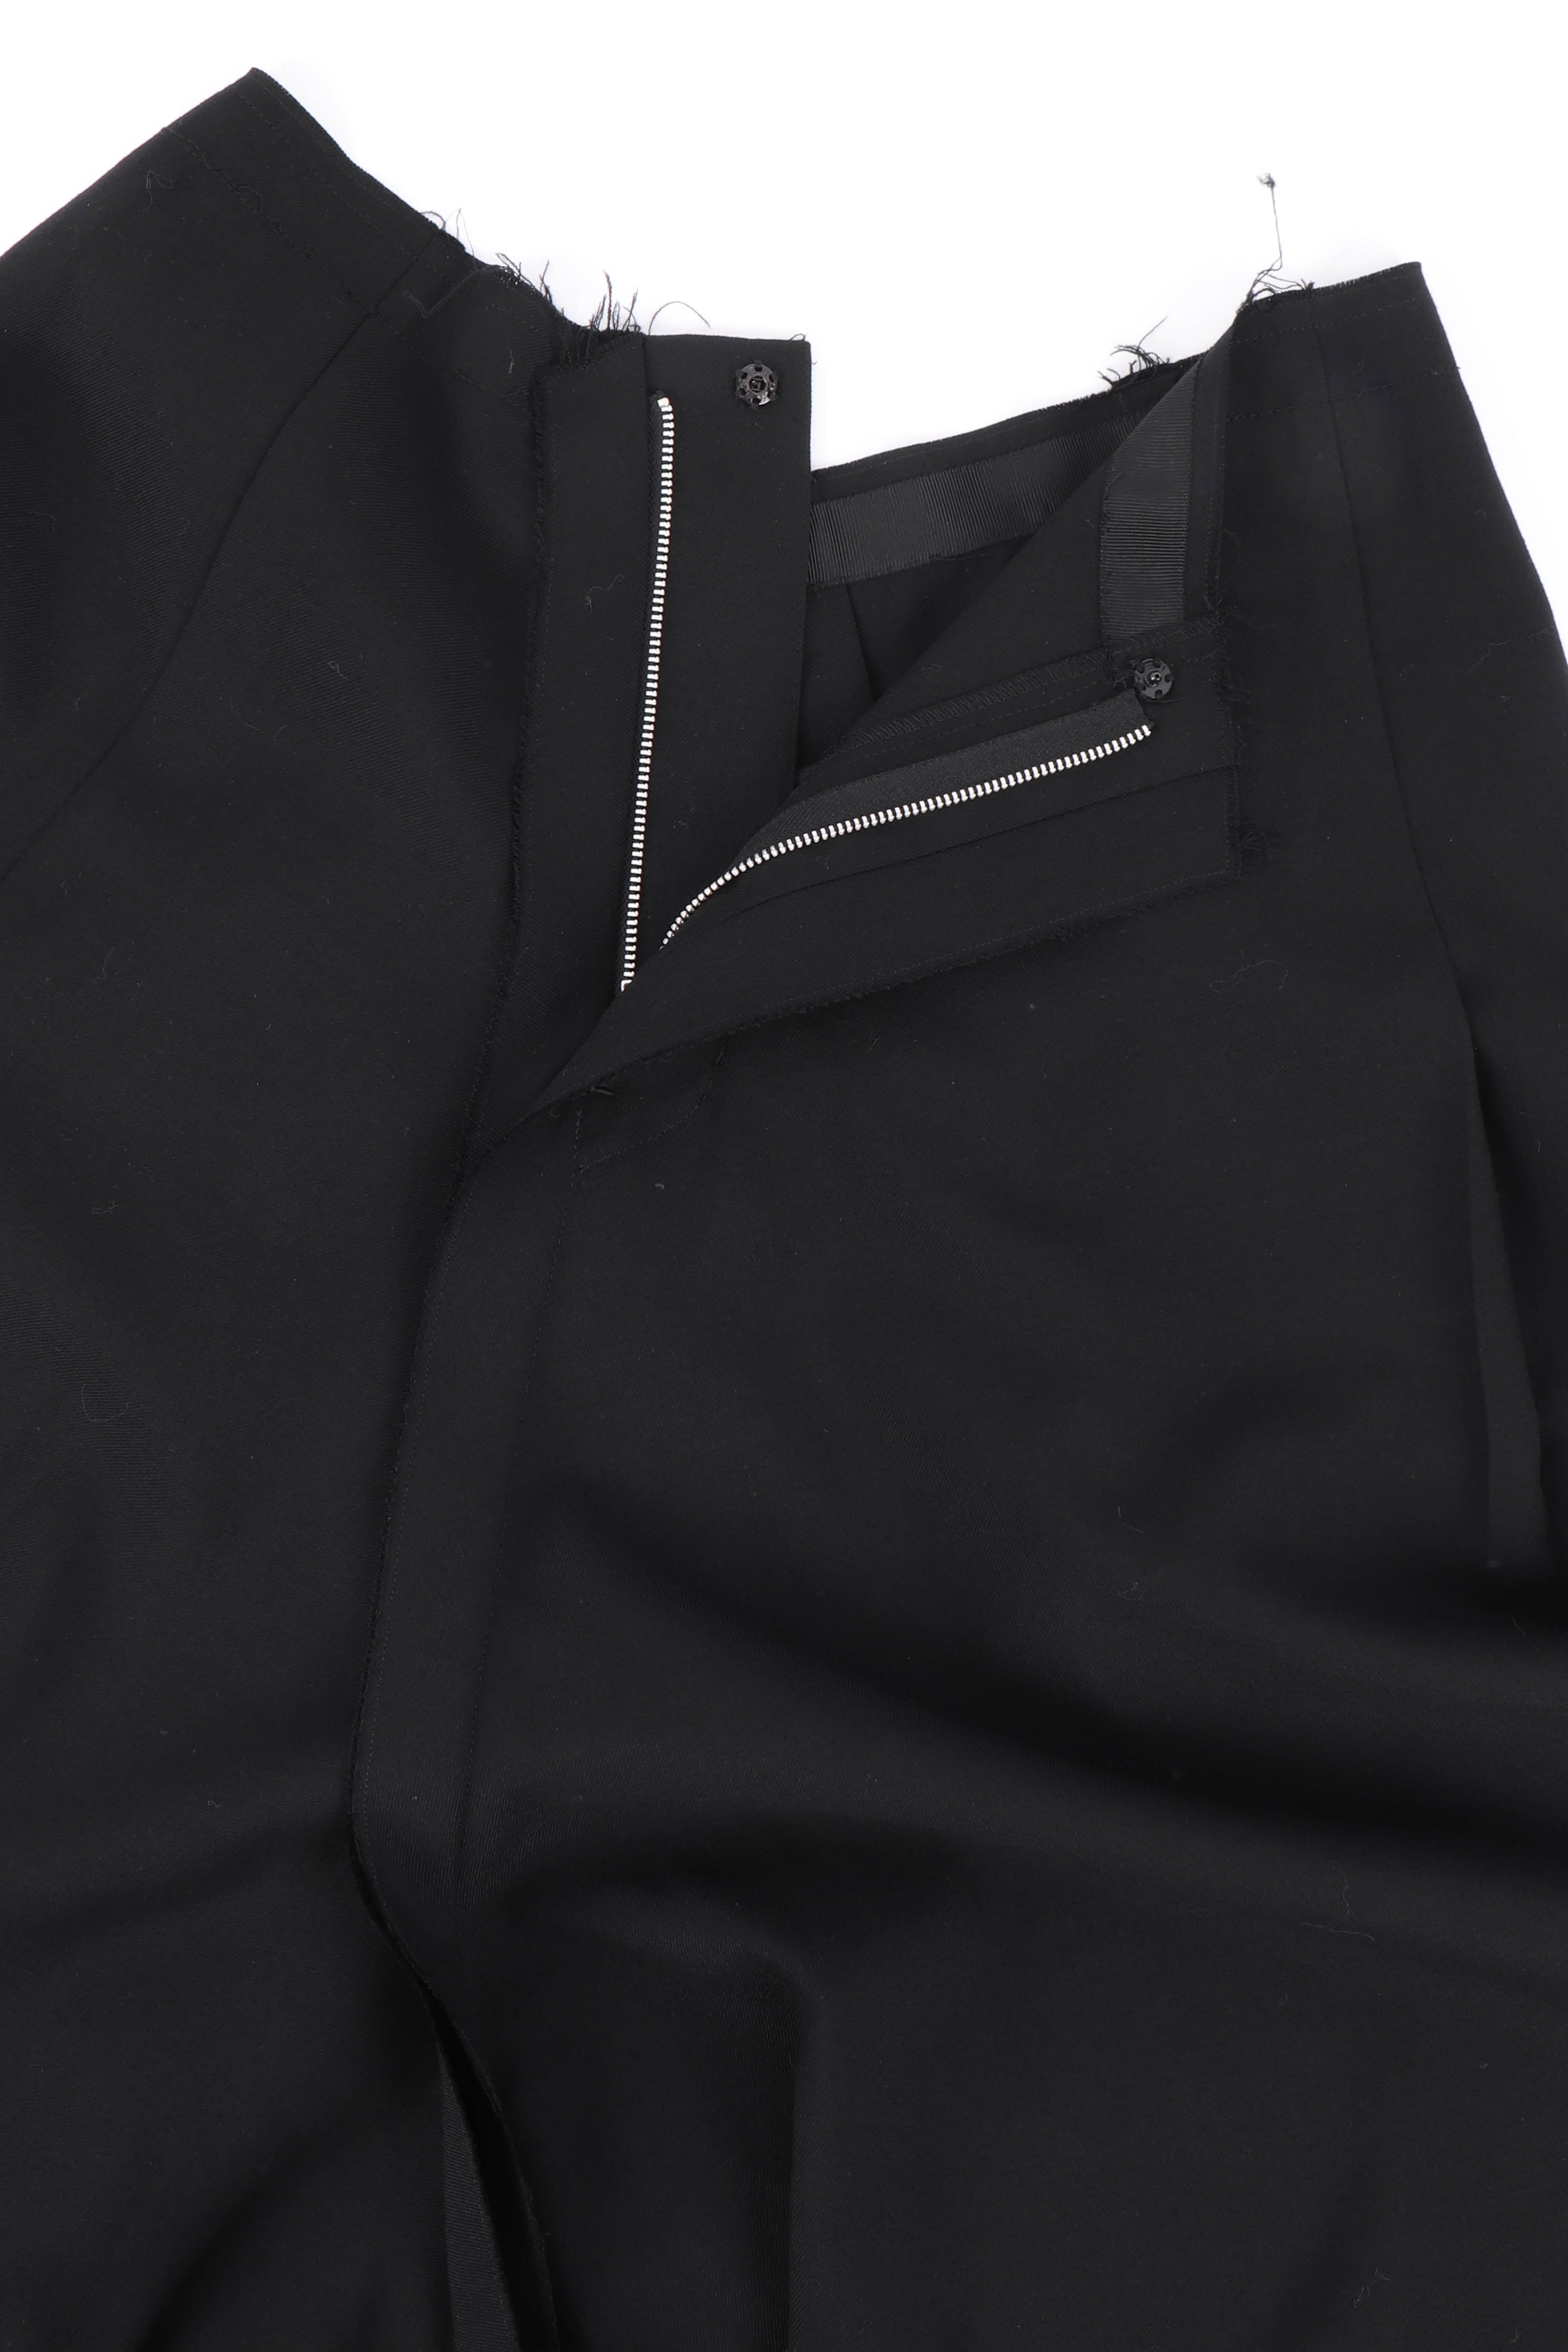 Yohji Yamamoto Asymmetric Hem Skirt front zipper closeup @recessla